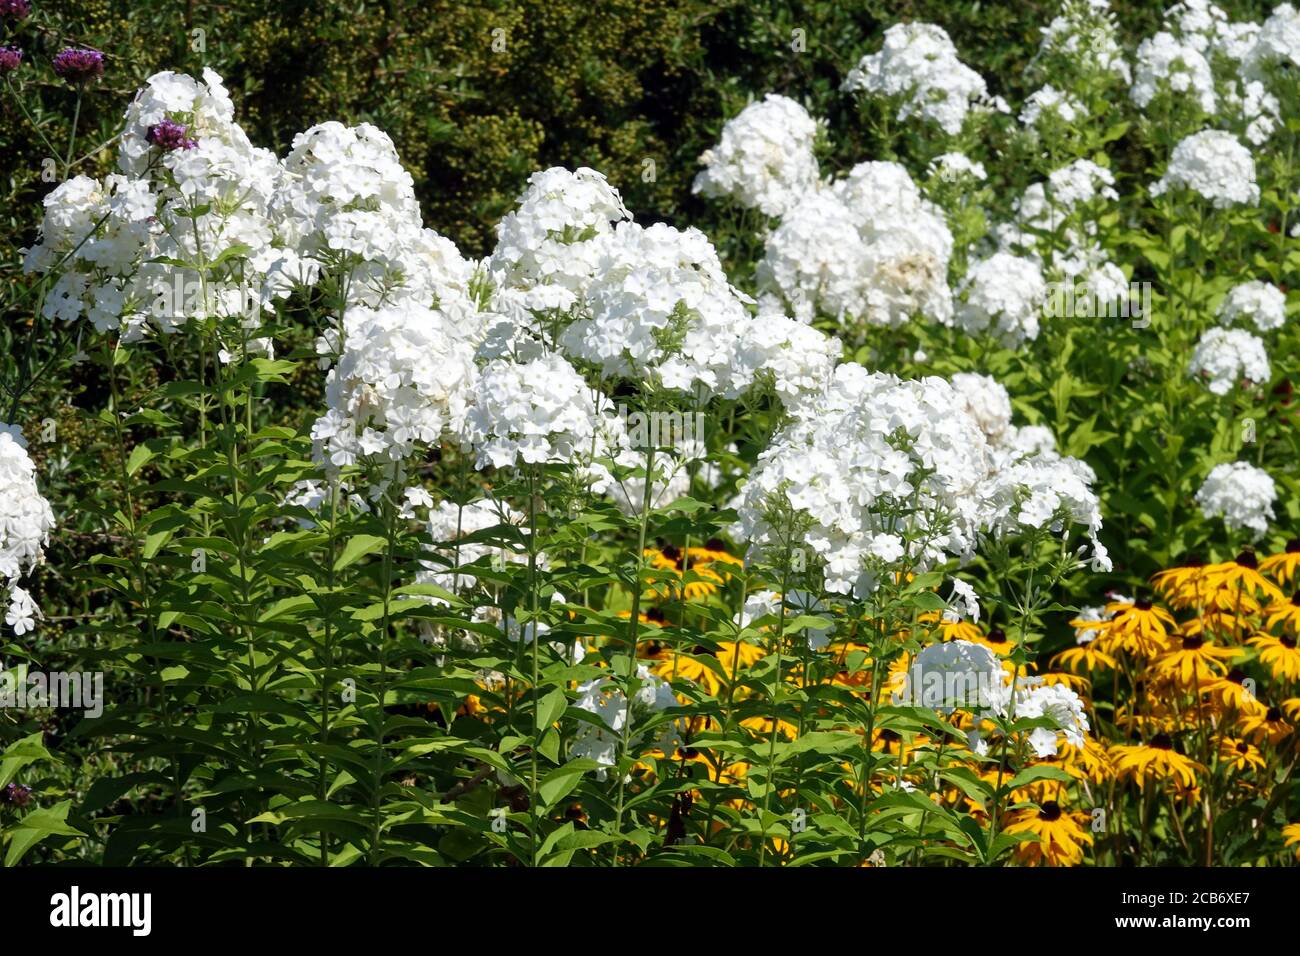 White Phlox Mount Fujiyama Rudbeckia fulgida garden perennial border Stock Photo